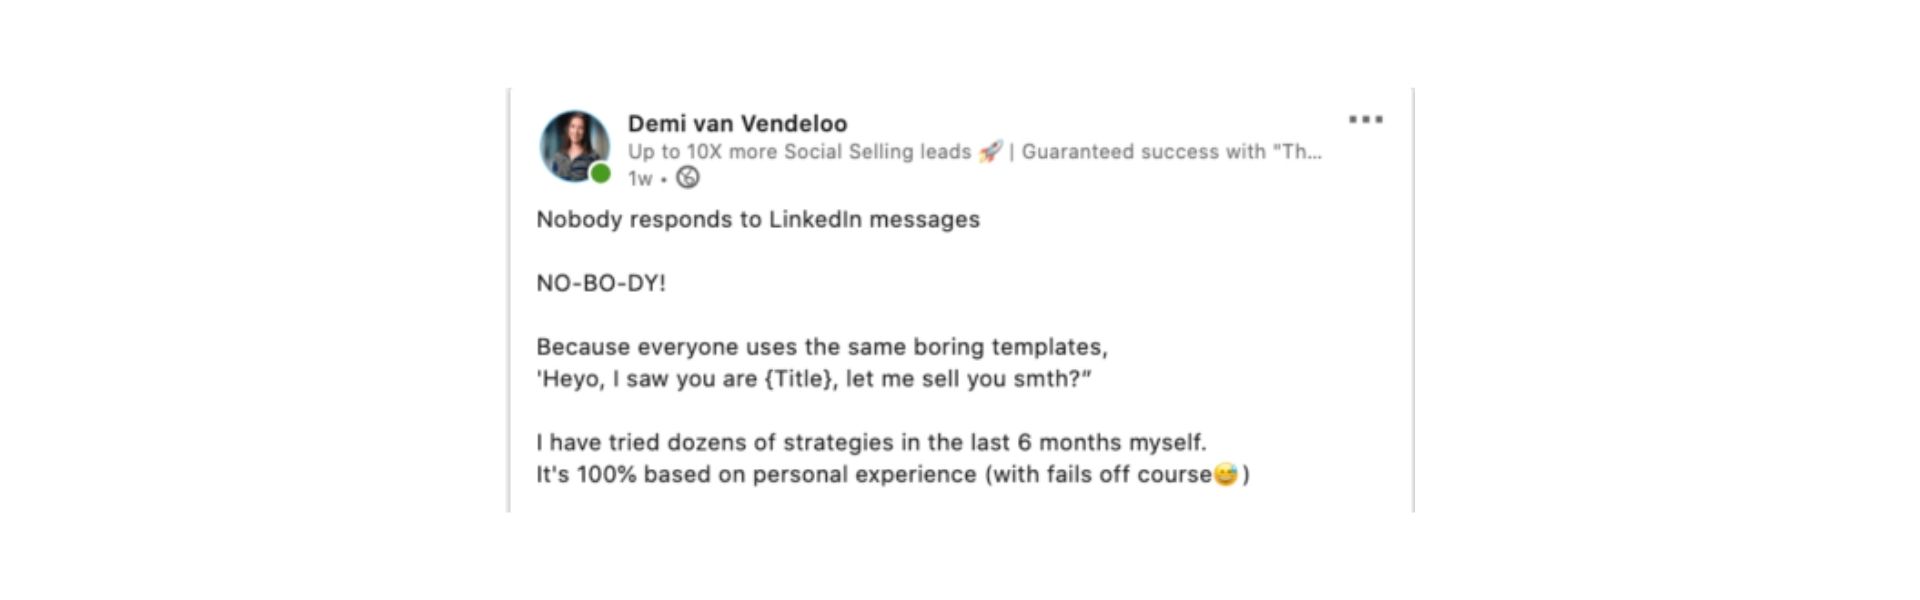 Nobody responds to Linkedin messages | Demi van Vendeloo